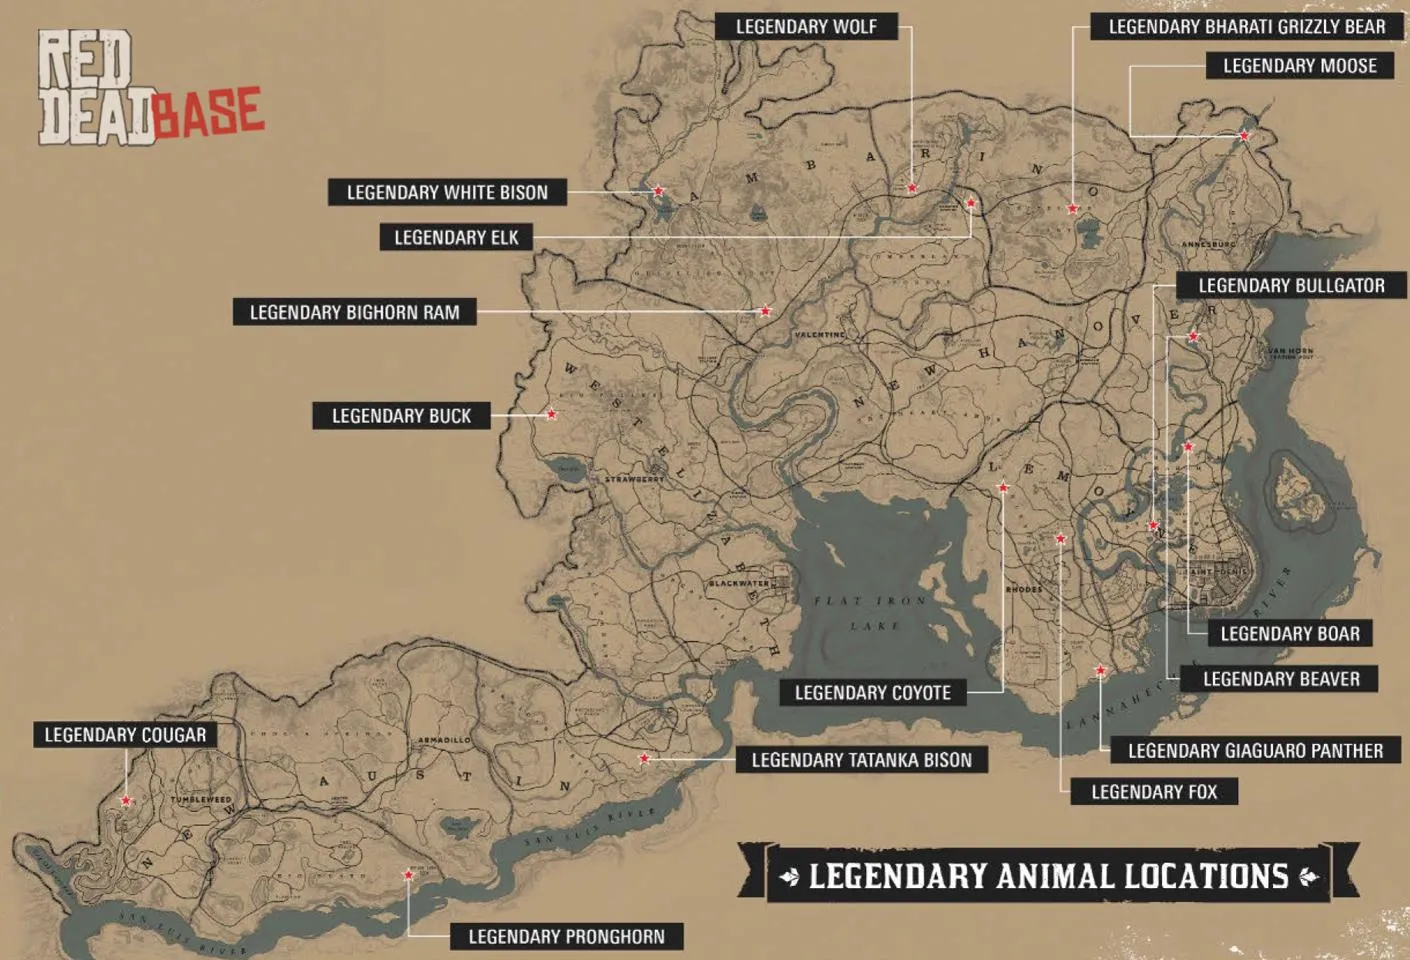 Legendary Beaver - Map Location in RDR2